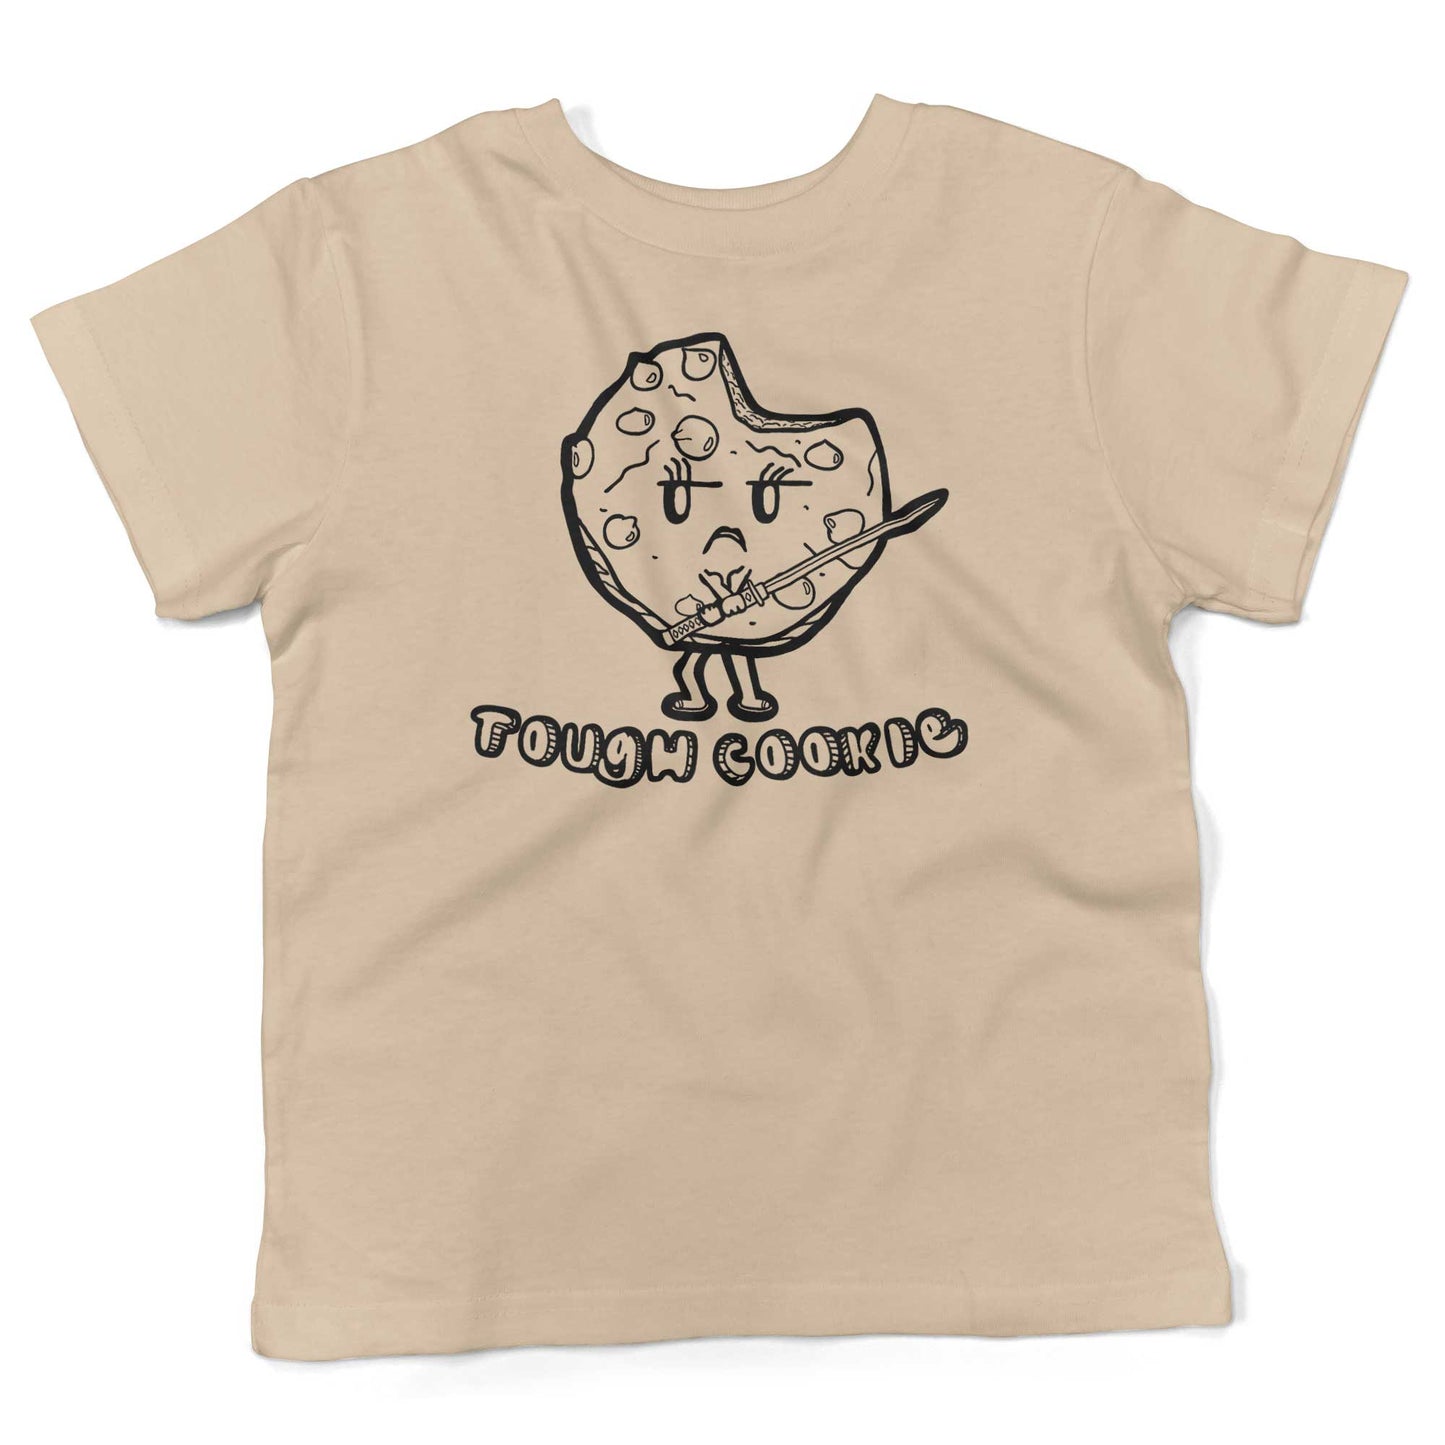 Tough Cookie Toddler Shirt-Organic Natural-2T